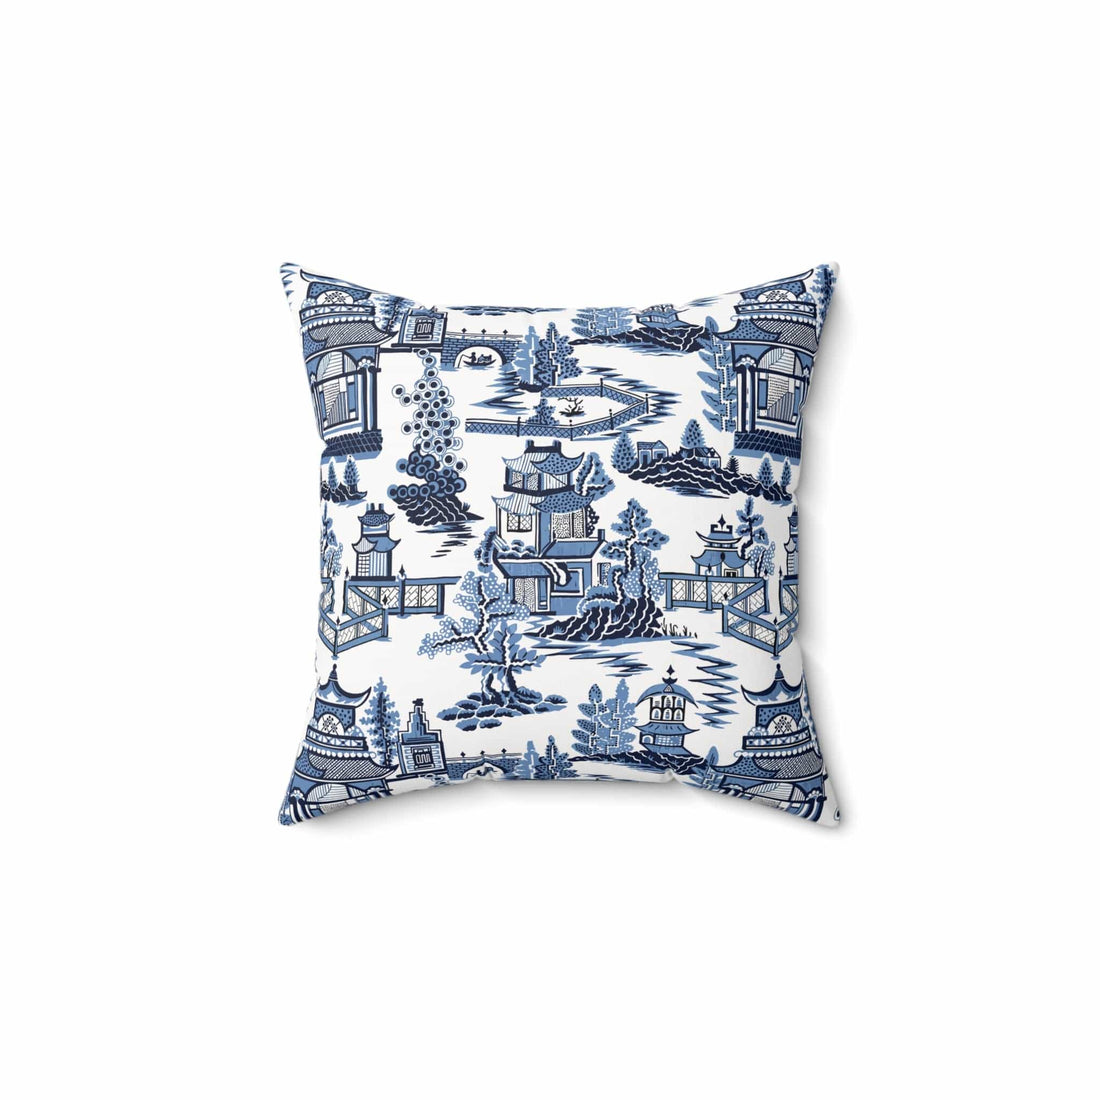 Kate McEnroe New York Chinoiserie Blue Willow Pagoda Throw Pillow, Traditional Blue White Asian Scene CushionsThrow Pillows23540980523084617174